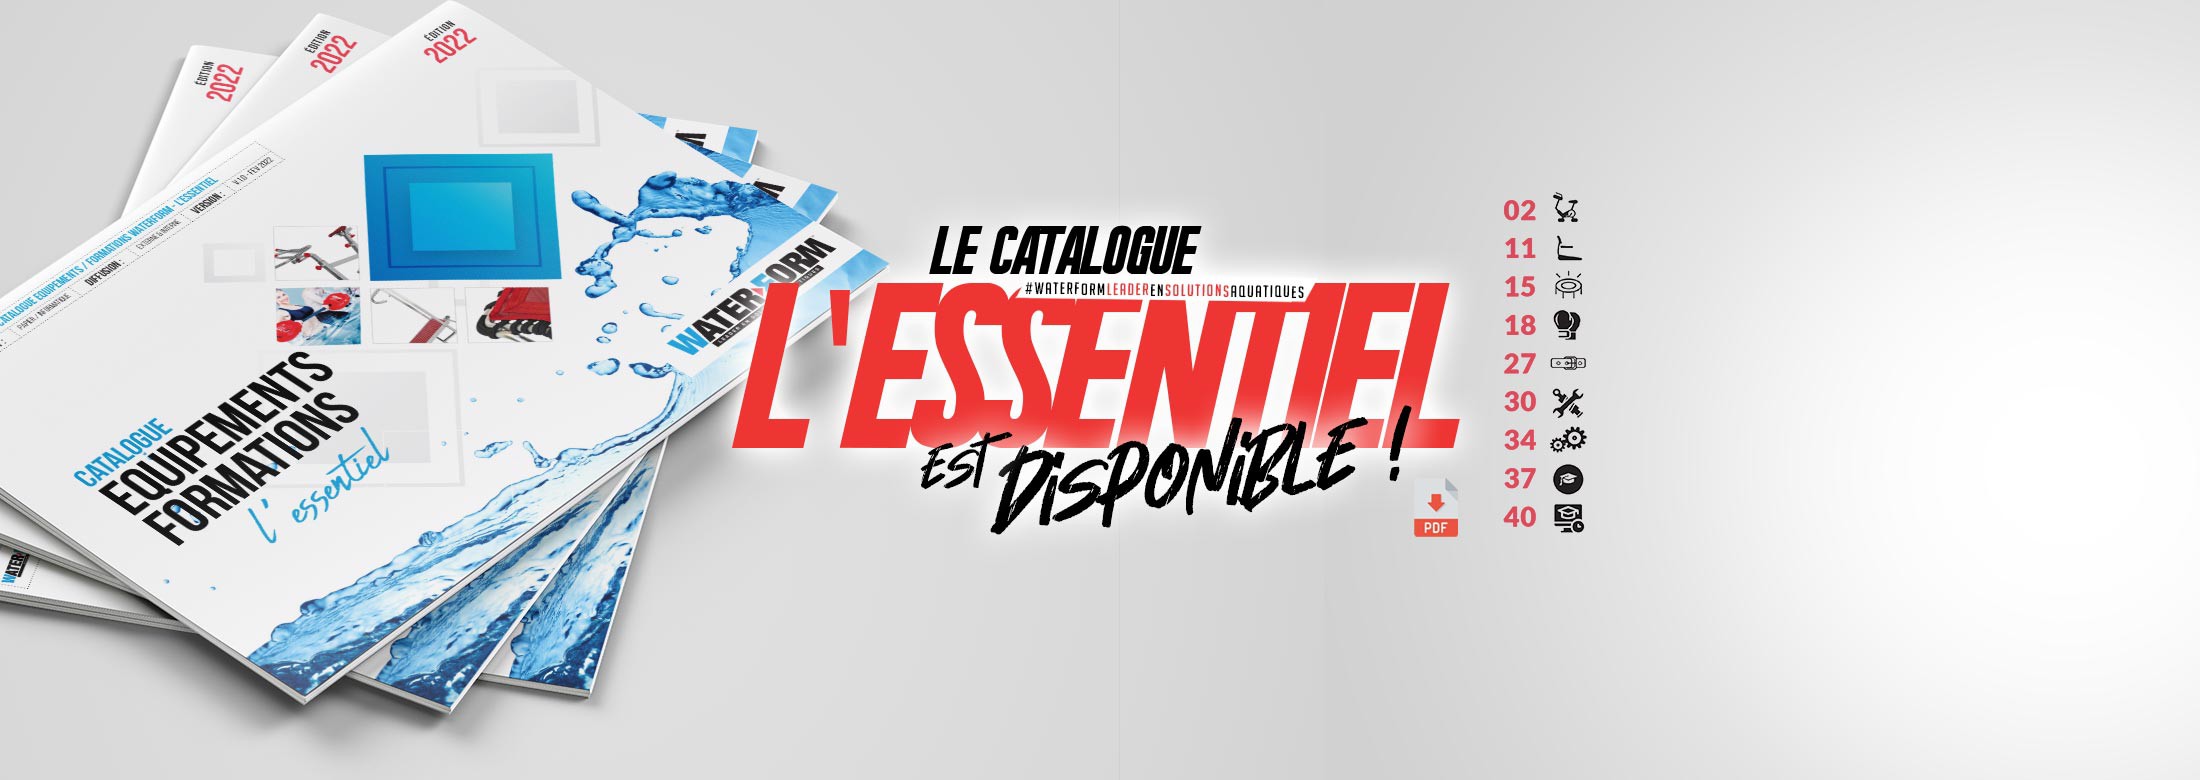 Catalogue "L'Essentiel" ed. 2022 disponible 